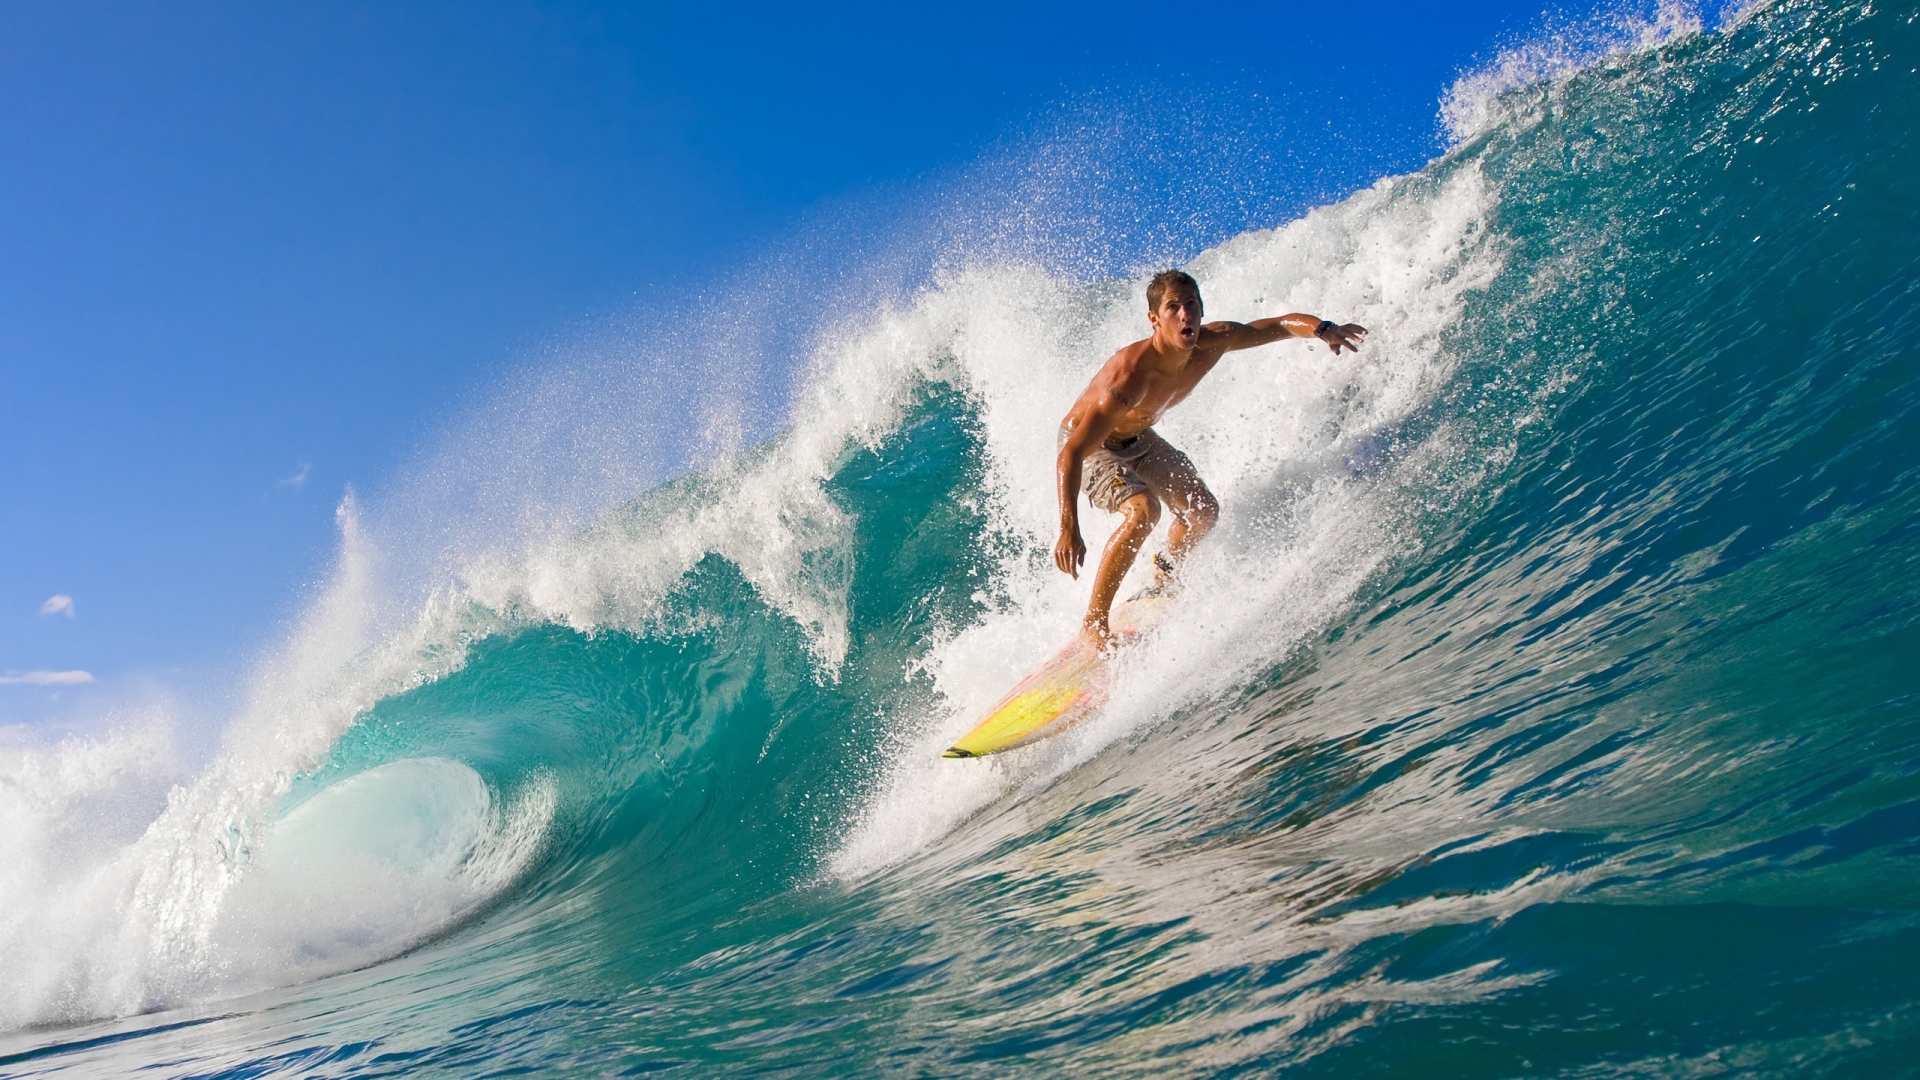 Summer Surf for 1920 x 1080 HDTV 1080p resolution